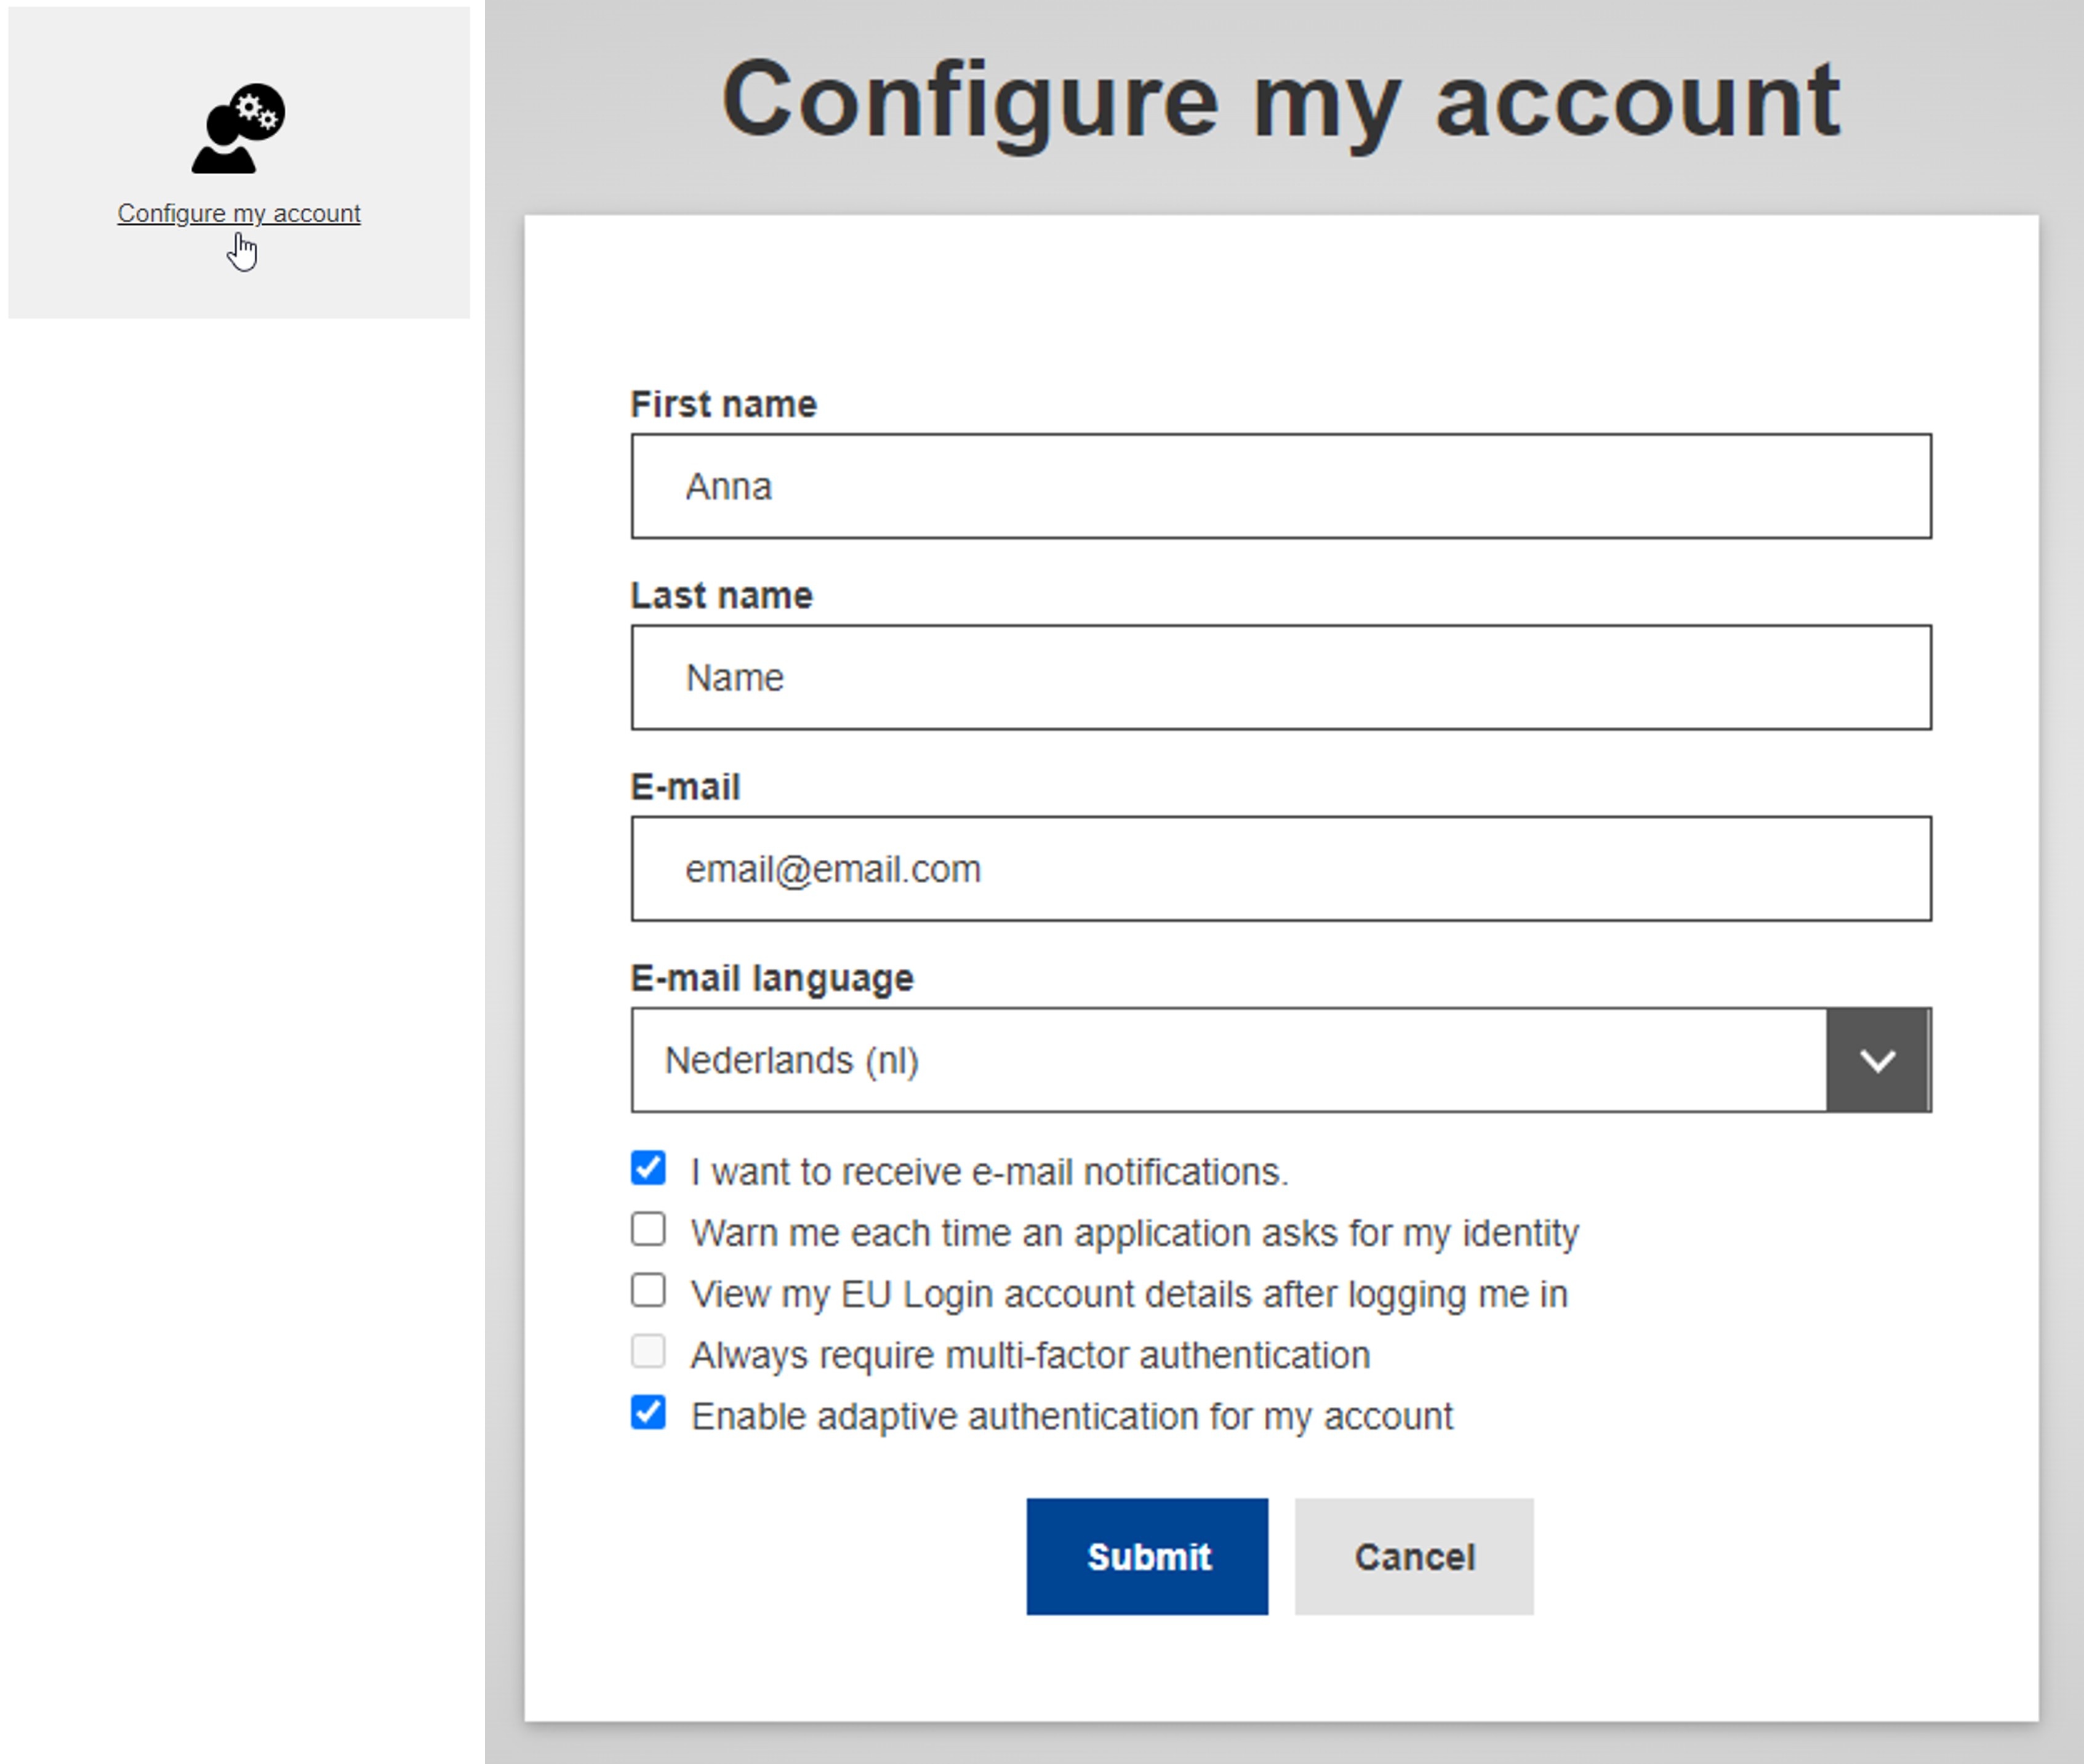 Configure my account options